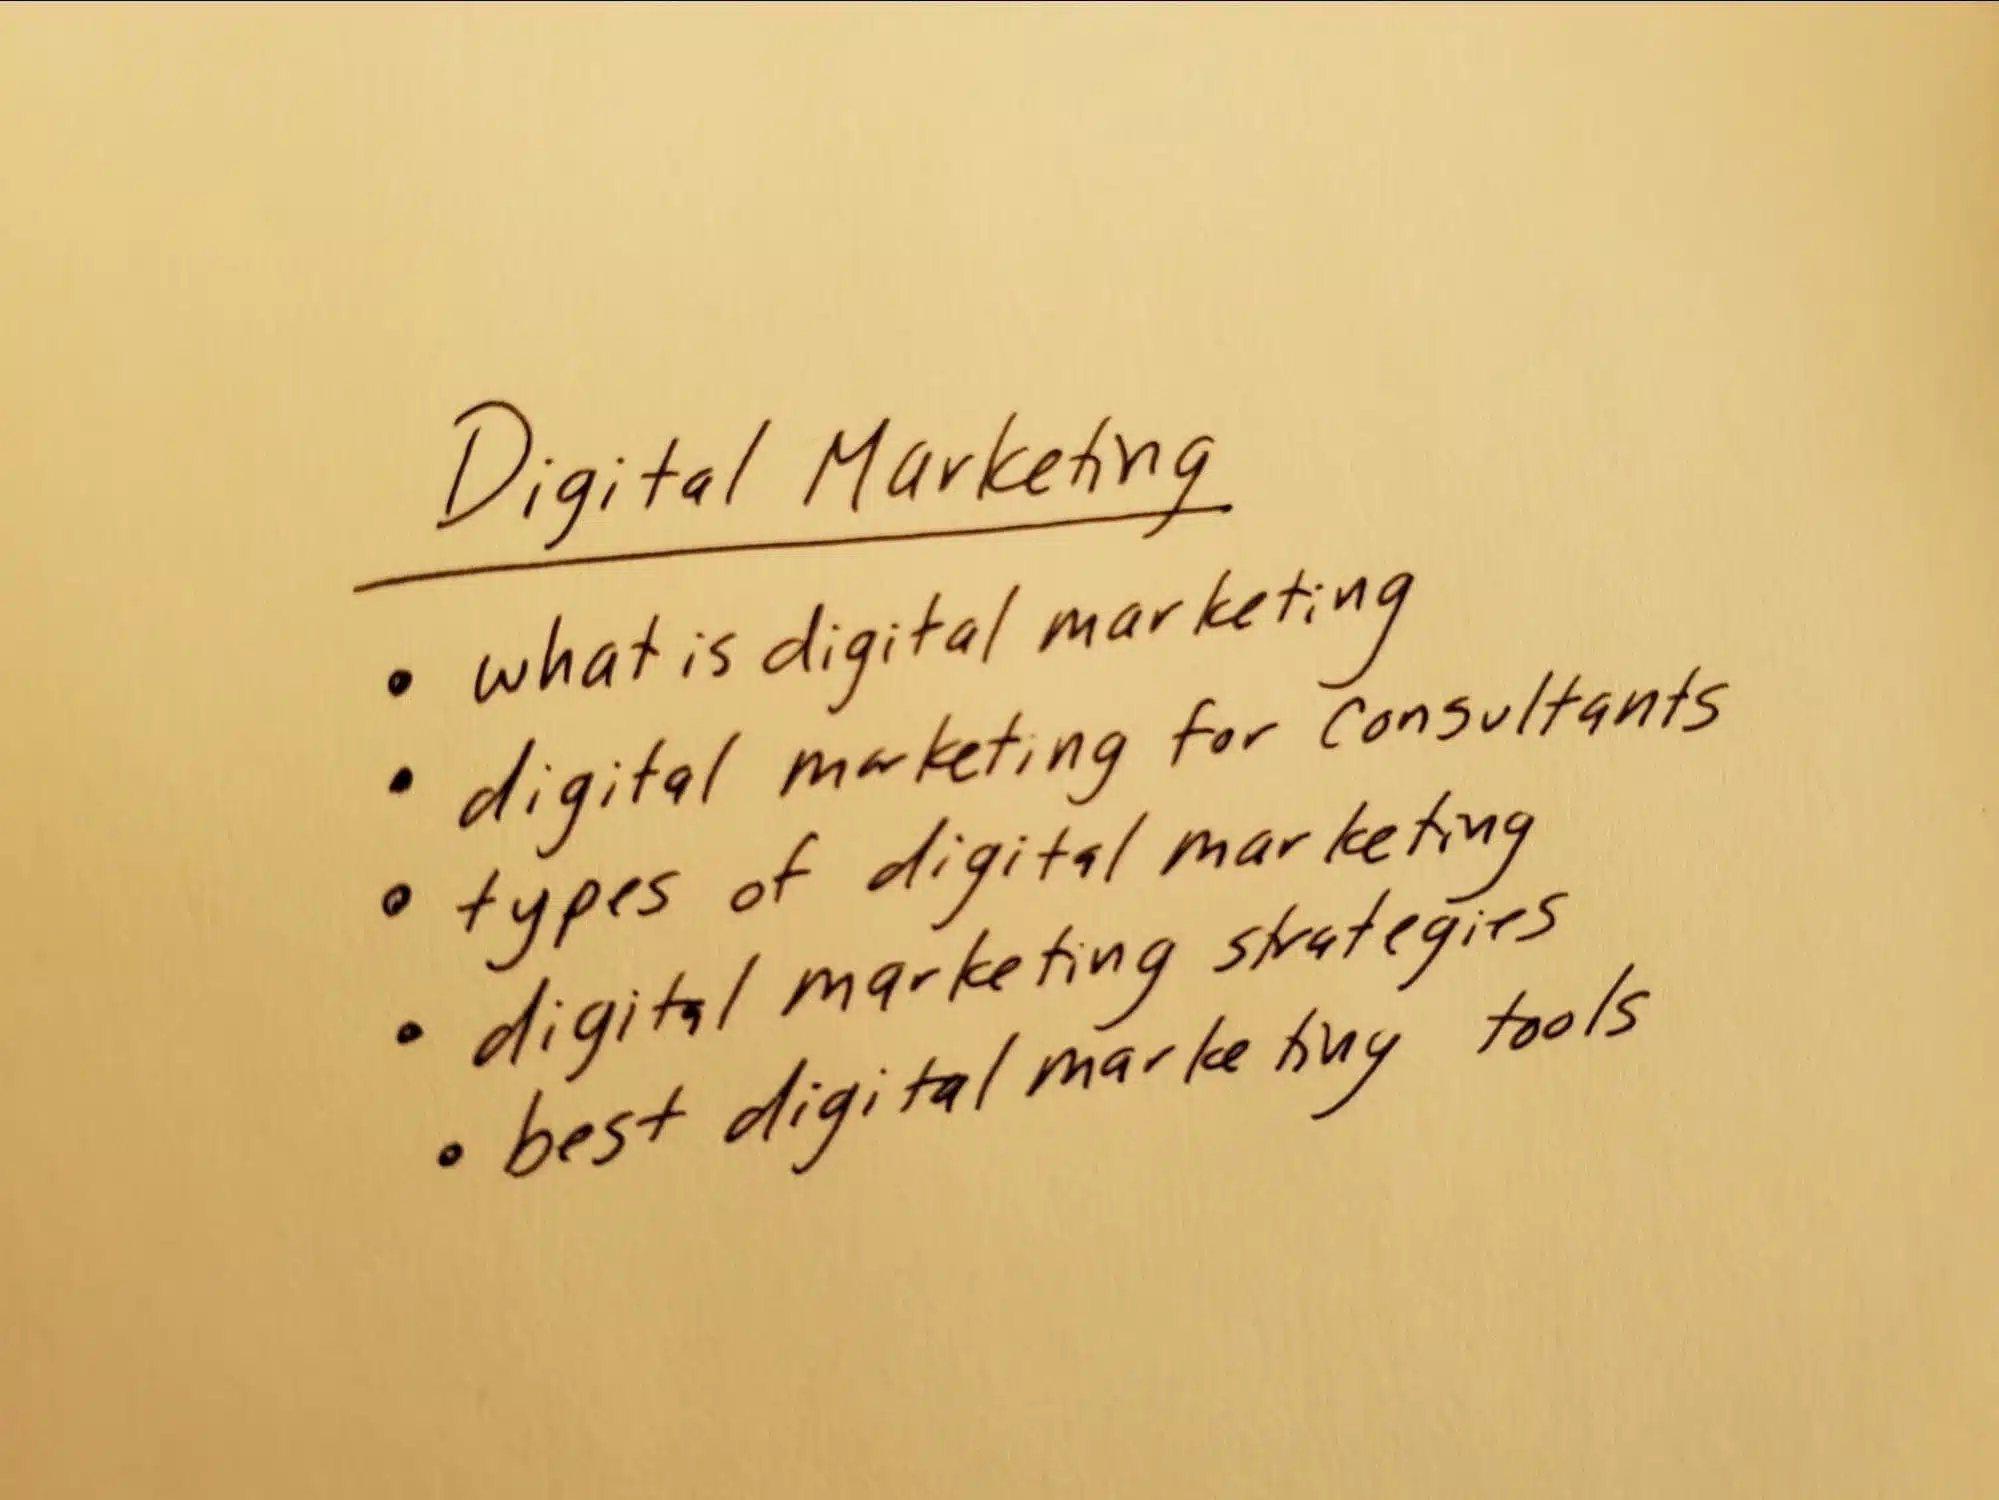 Digital marketing keyword list written on scratch paper